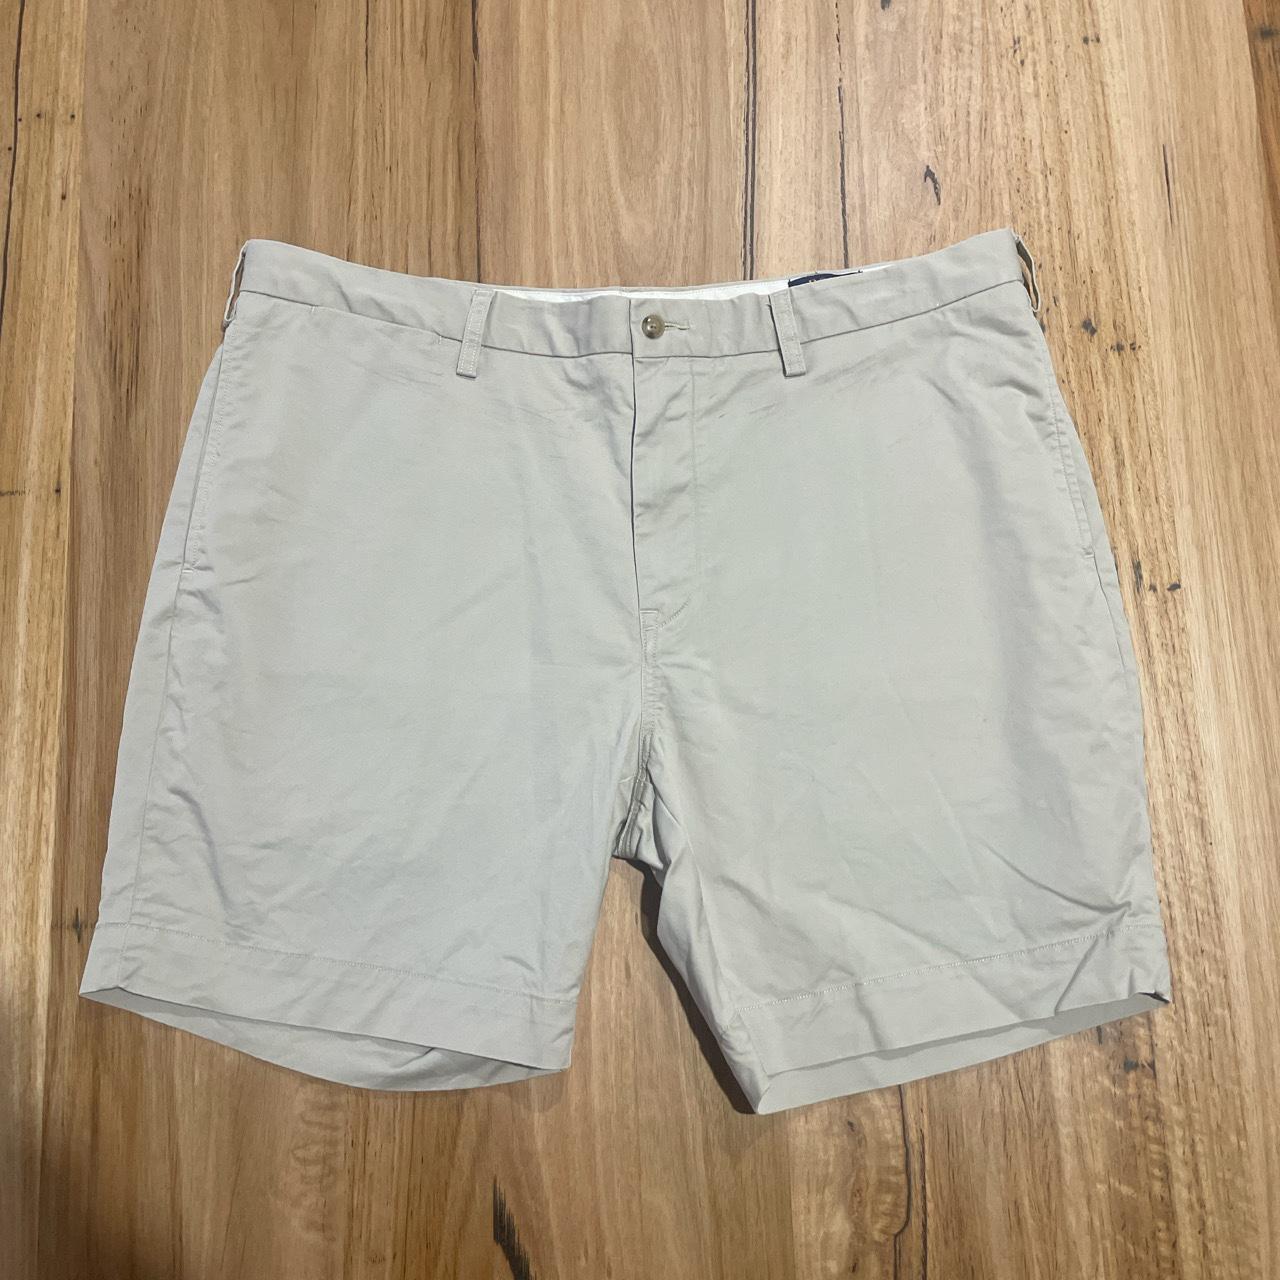 Polo Ralph Lauren Chino Shorts x 2 Bundle offer!!... - Depop